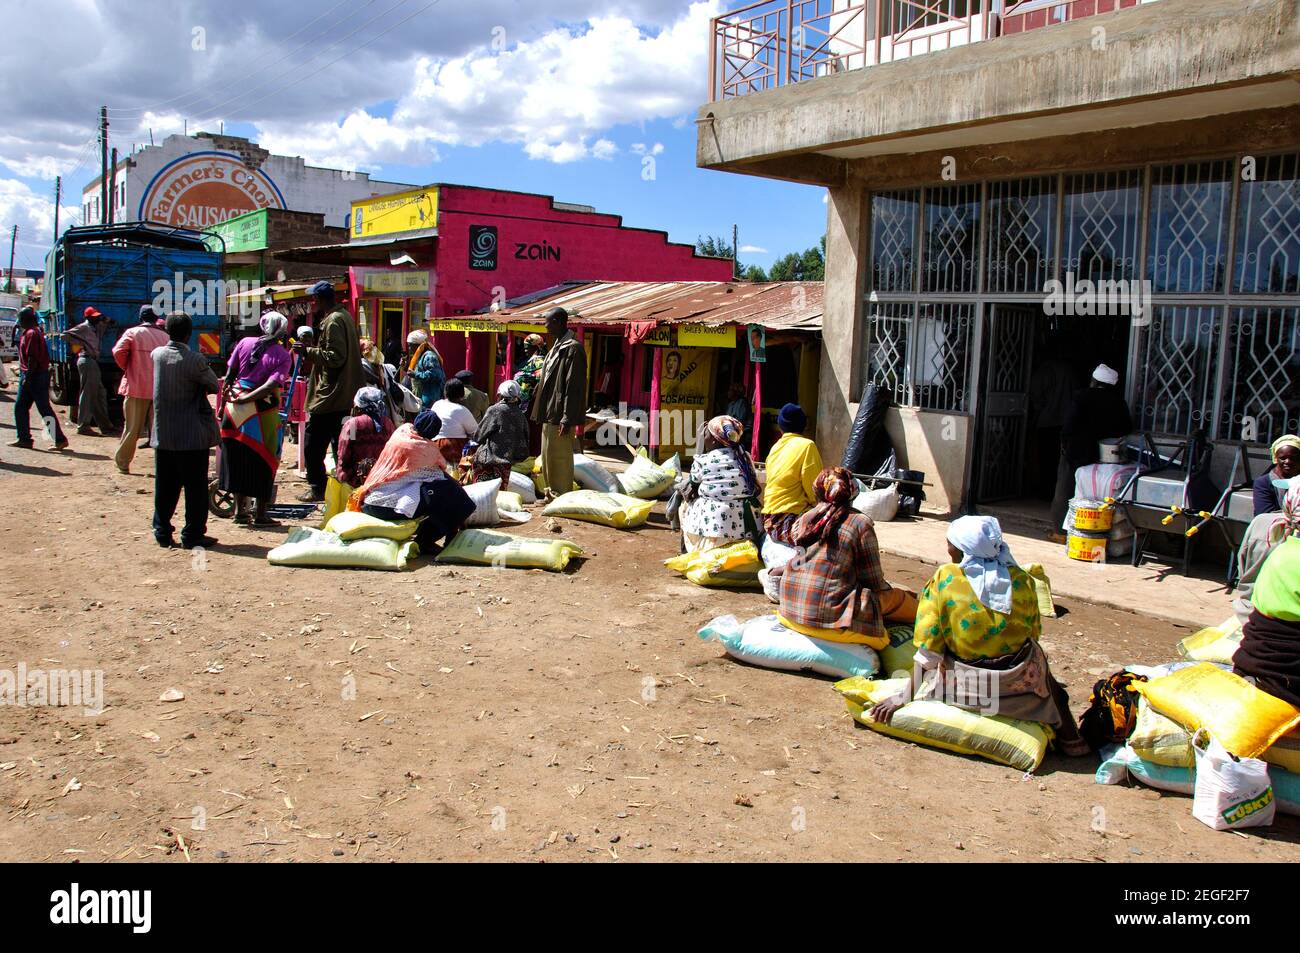 Die Bevölkerung von Eldoret lebt in Armut. Die Lebensmittelpreise sind drastische gestiegen. Les pauvres dans et autour de la vallée du Rift et d'Eldoret Banque D'Images